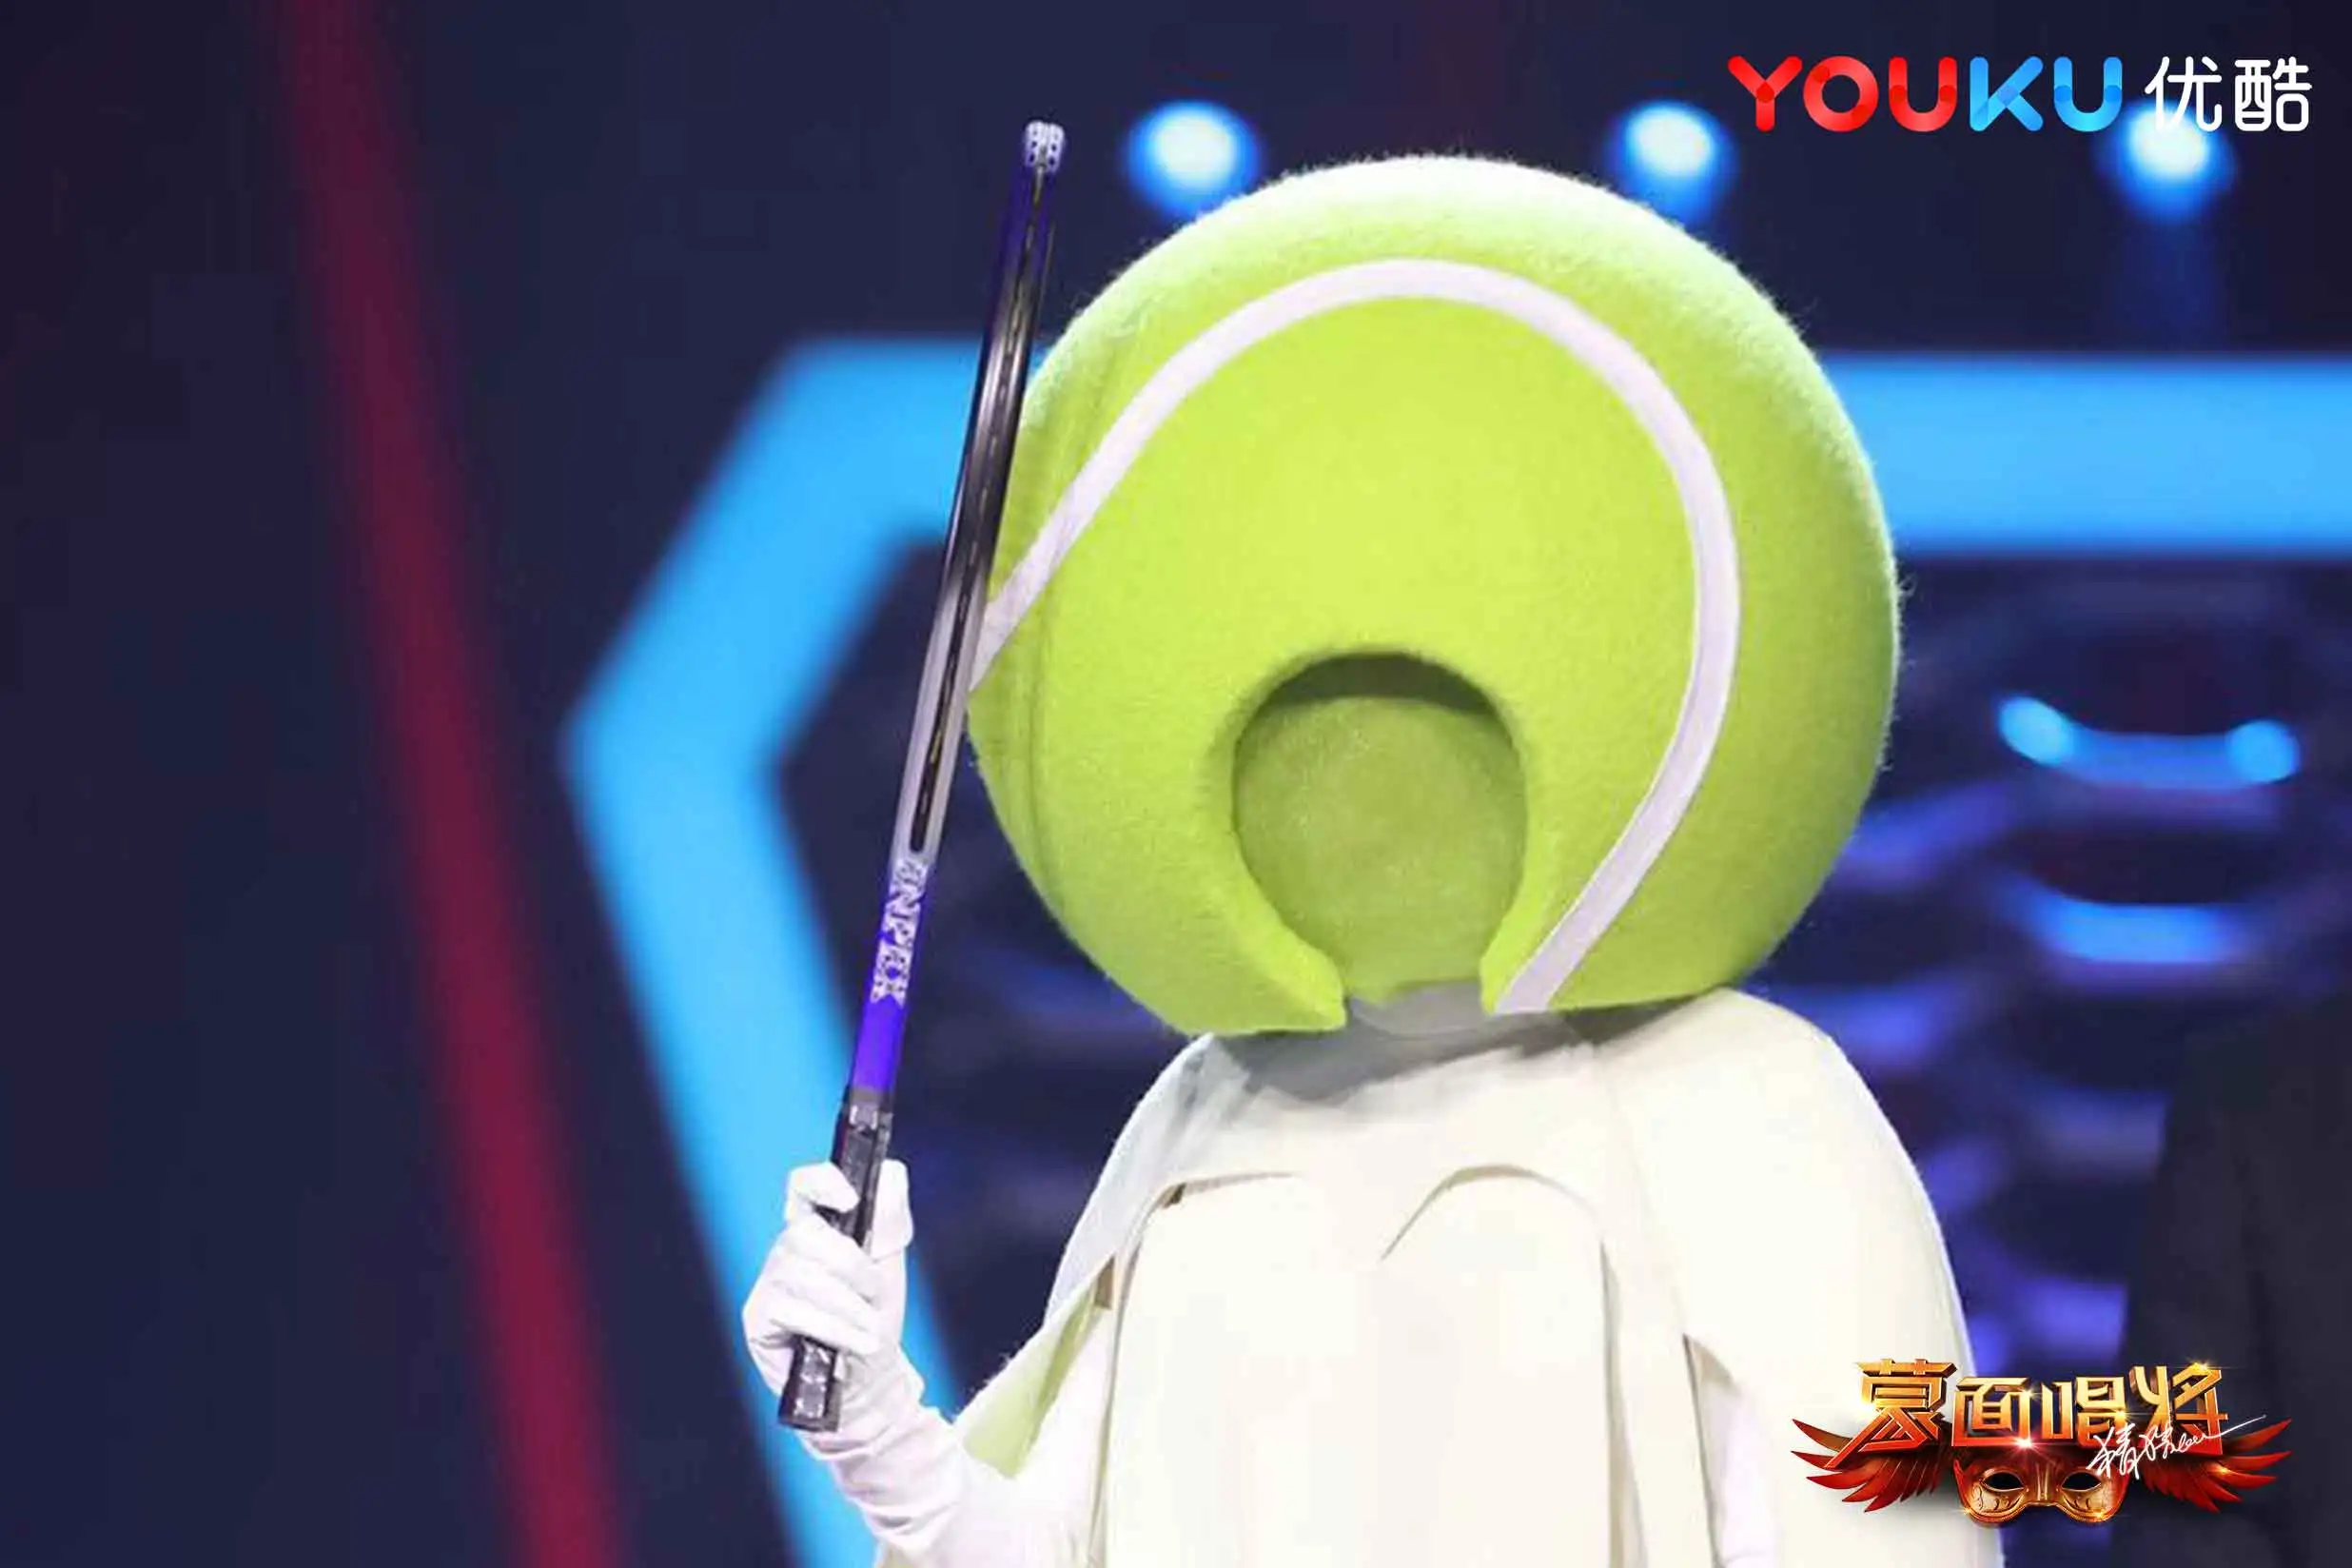 Youku masked singer will guess. JPG